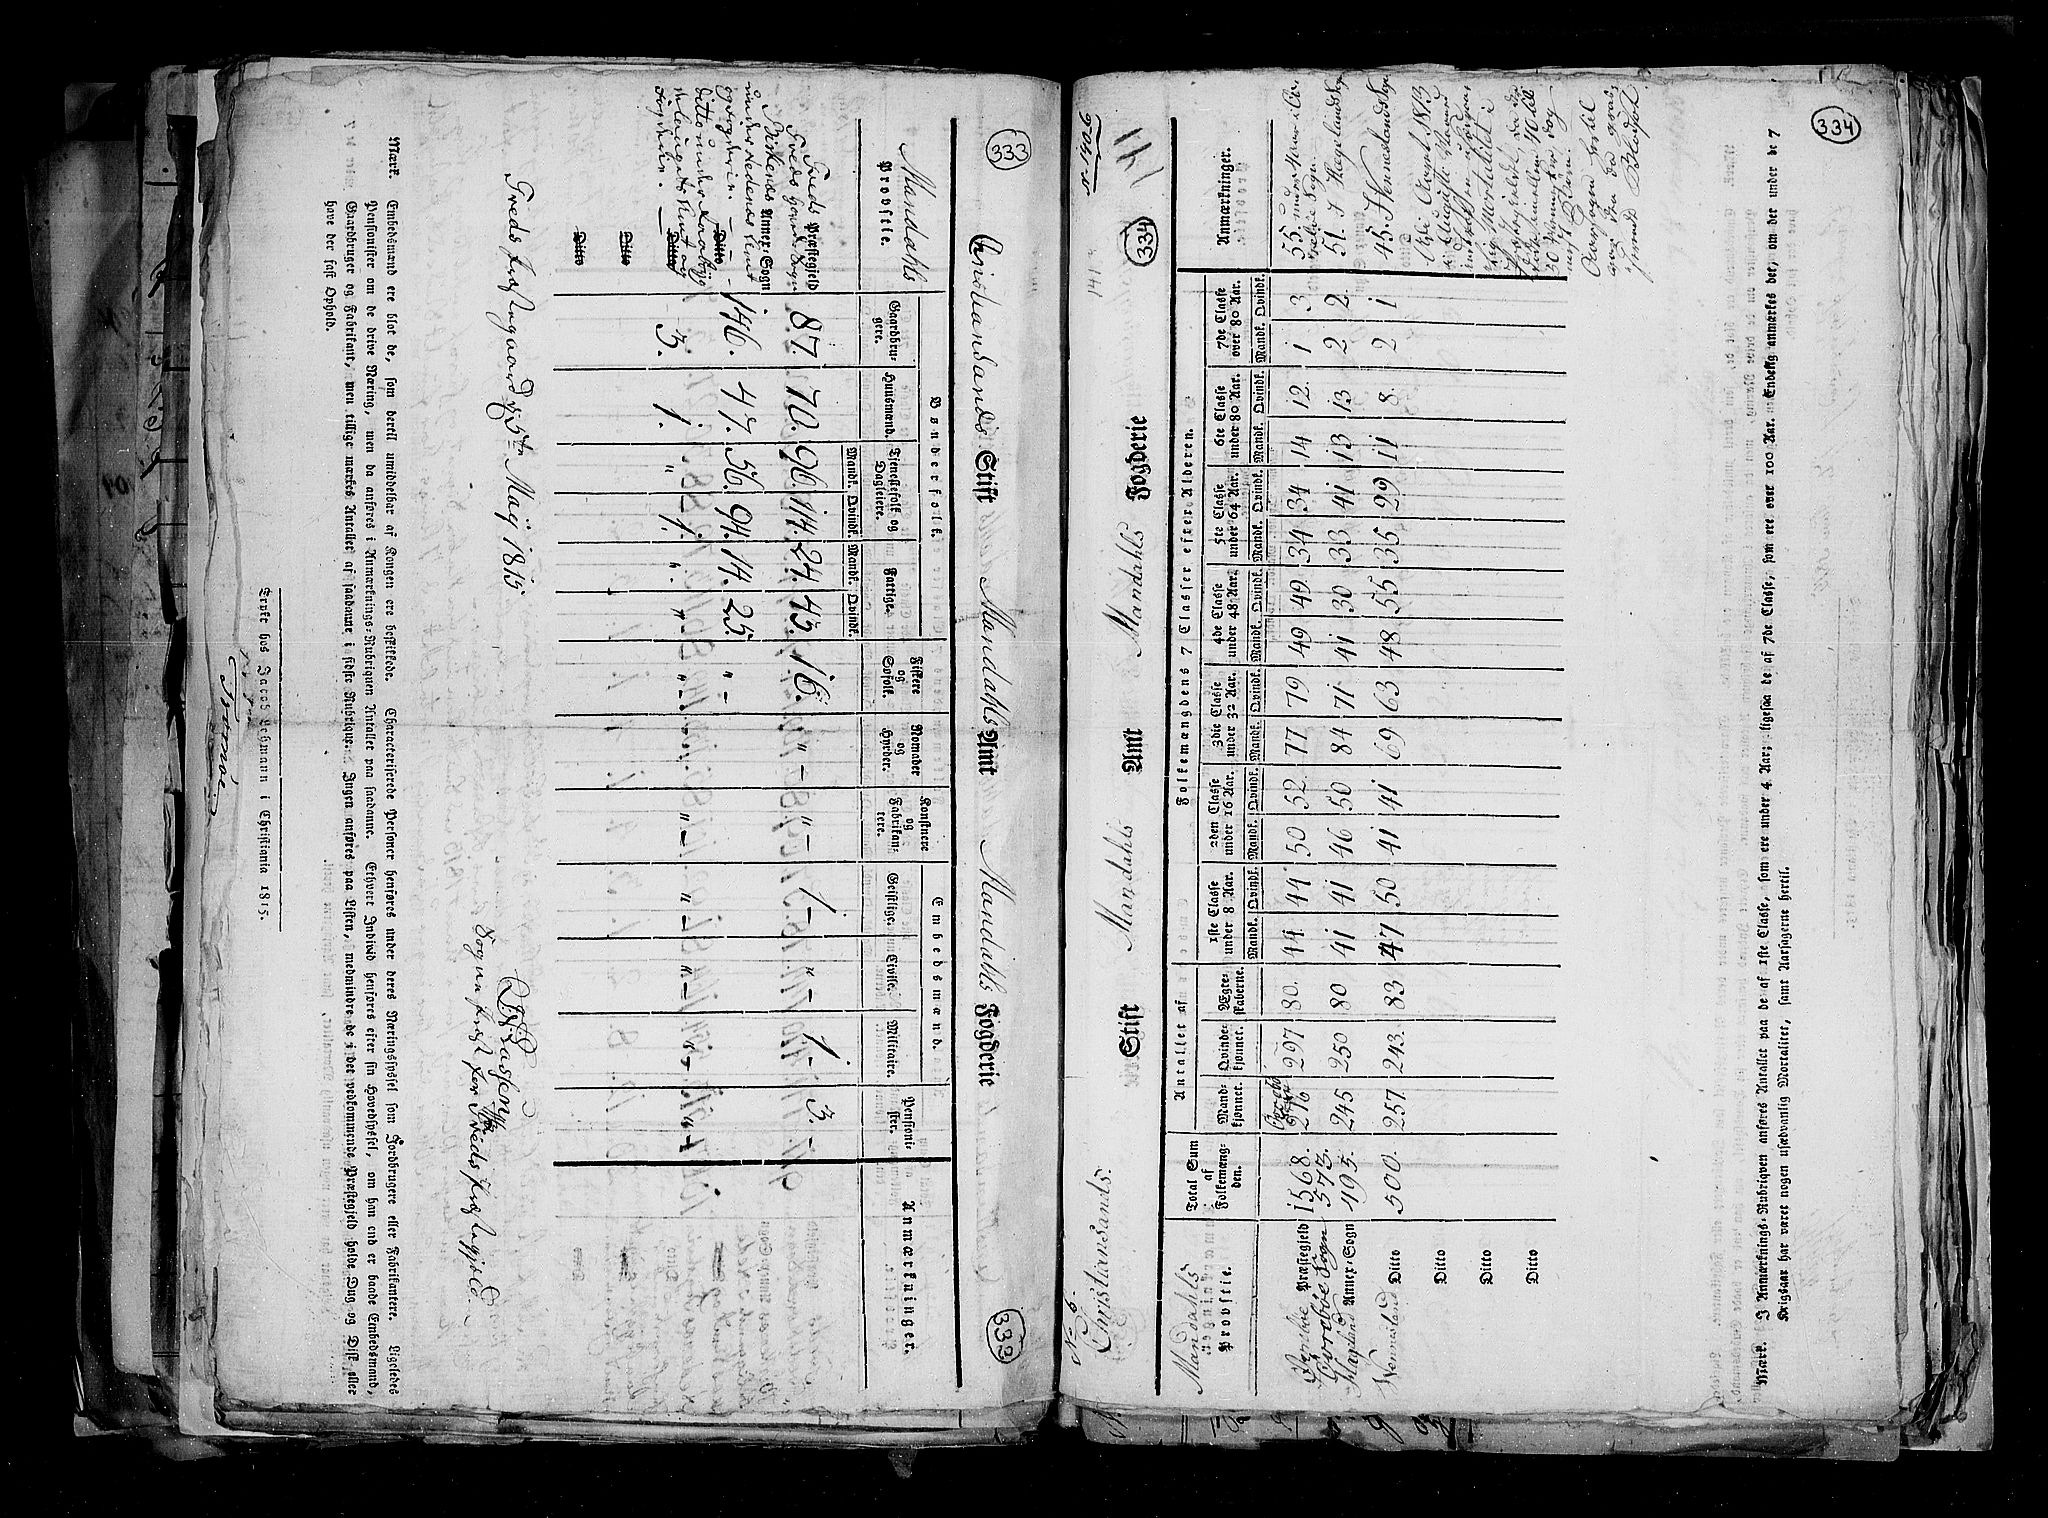 RA, Census 1815, vol. 1: Akershus stift and Kristiansand stift, 1815, p. 238